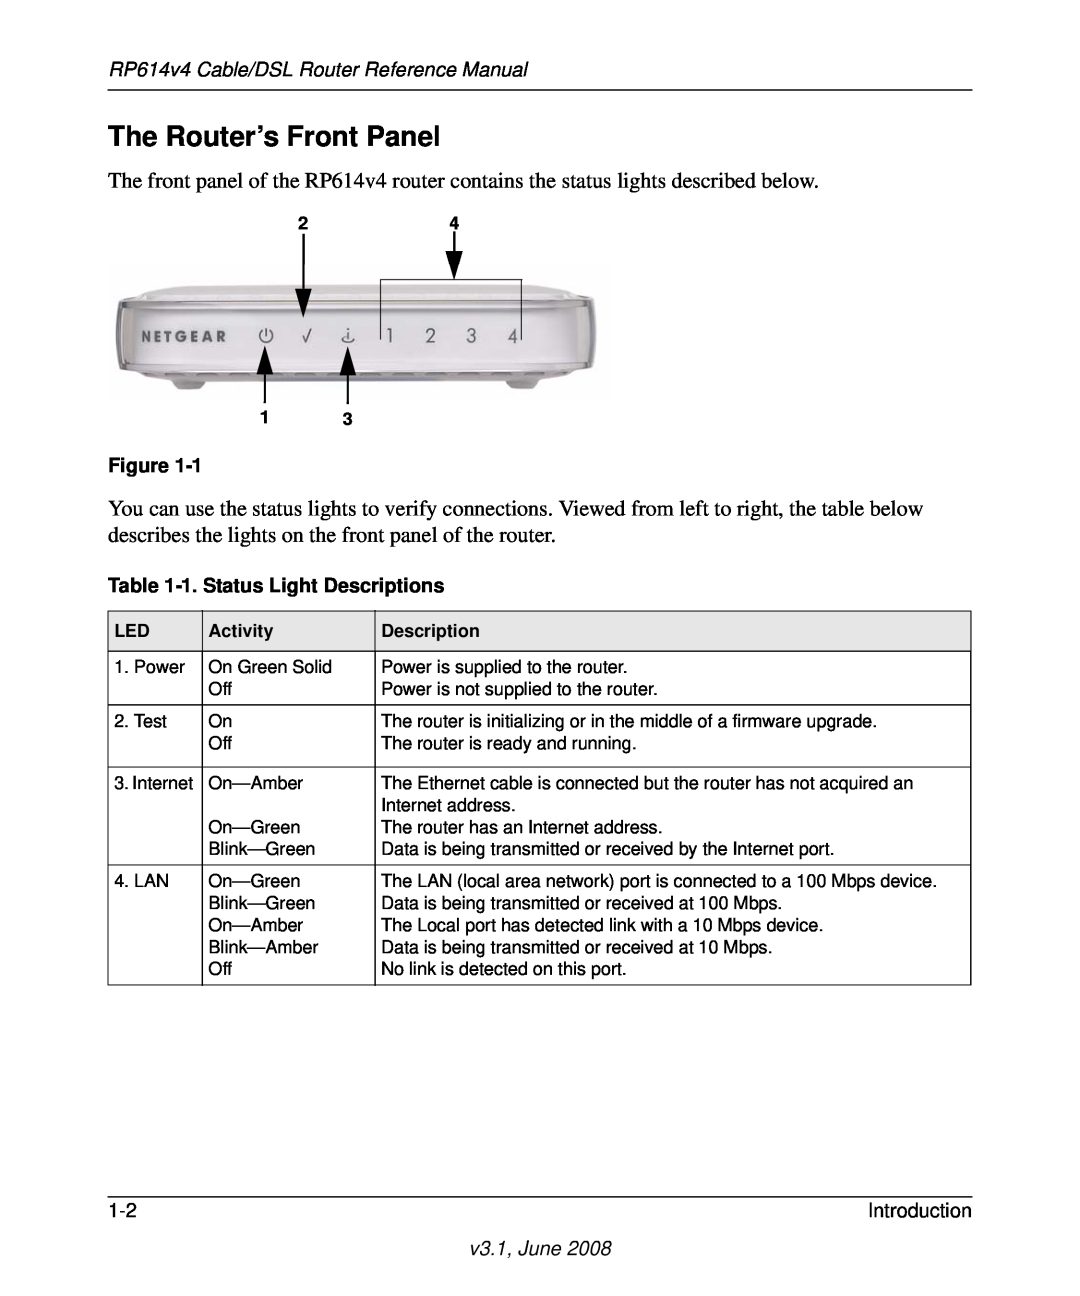 NETGEAR RP614 v4 manual The Router’s Front Panel, 1. Status Light Descriptions 